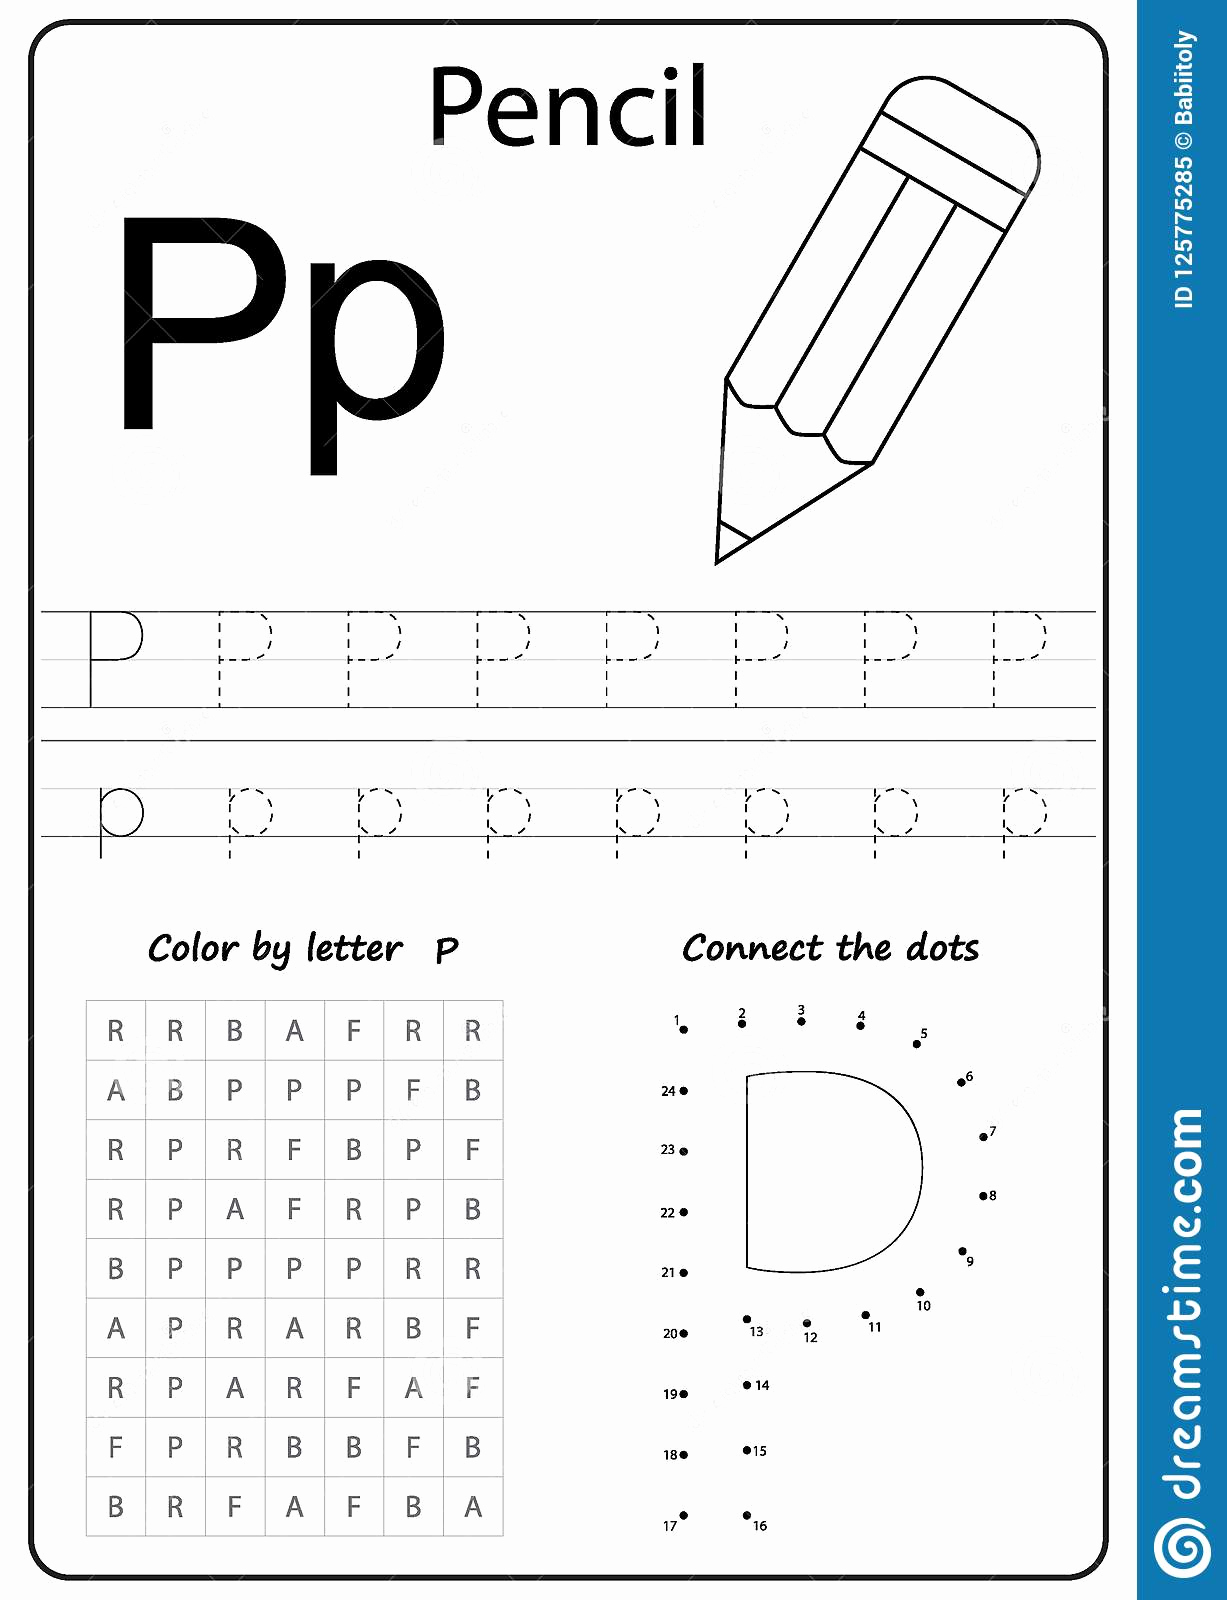 Free Printable Letter P Worksheets Inspirational Letter P Worksheets to Print Letter P Worksheets